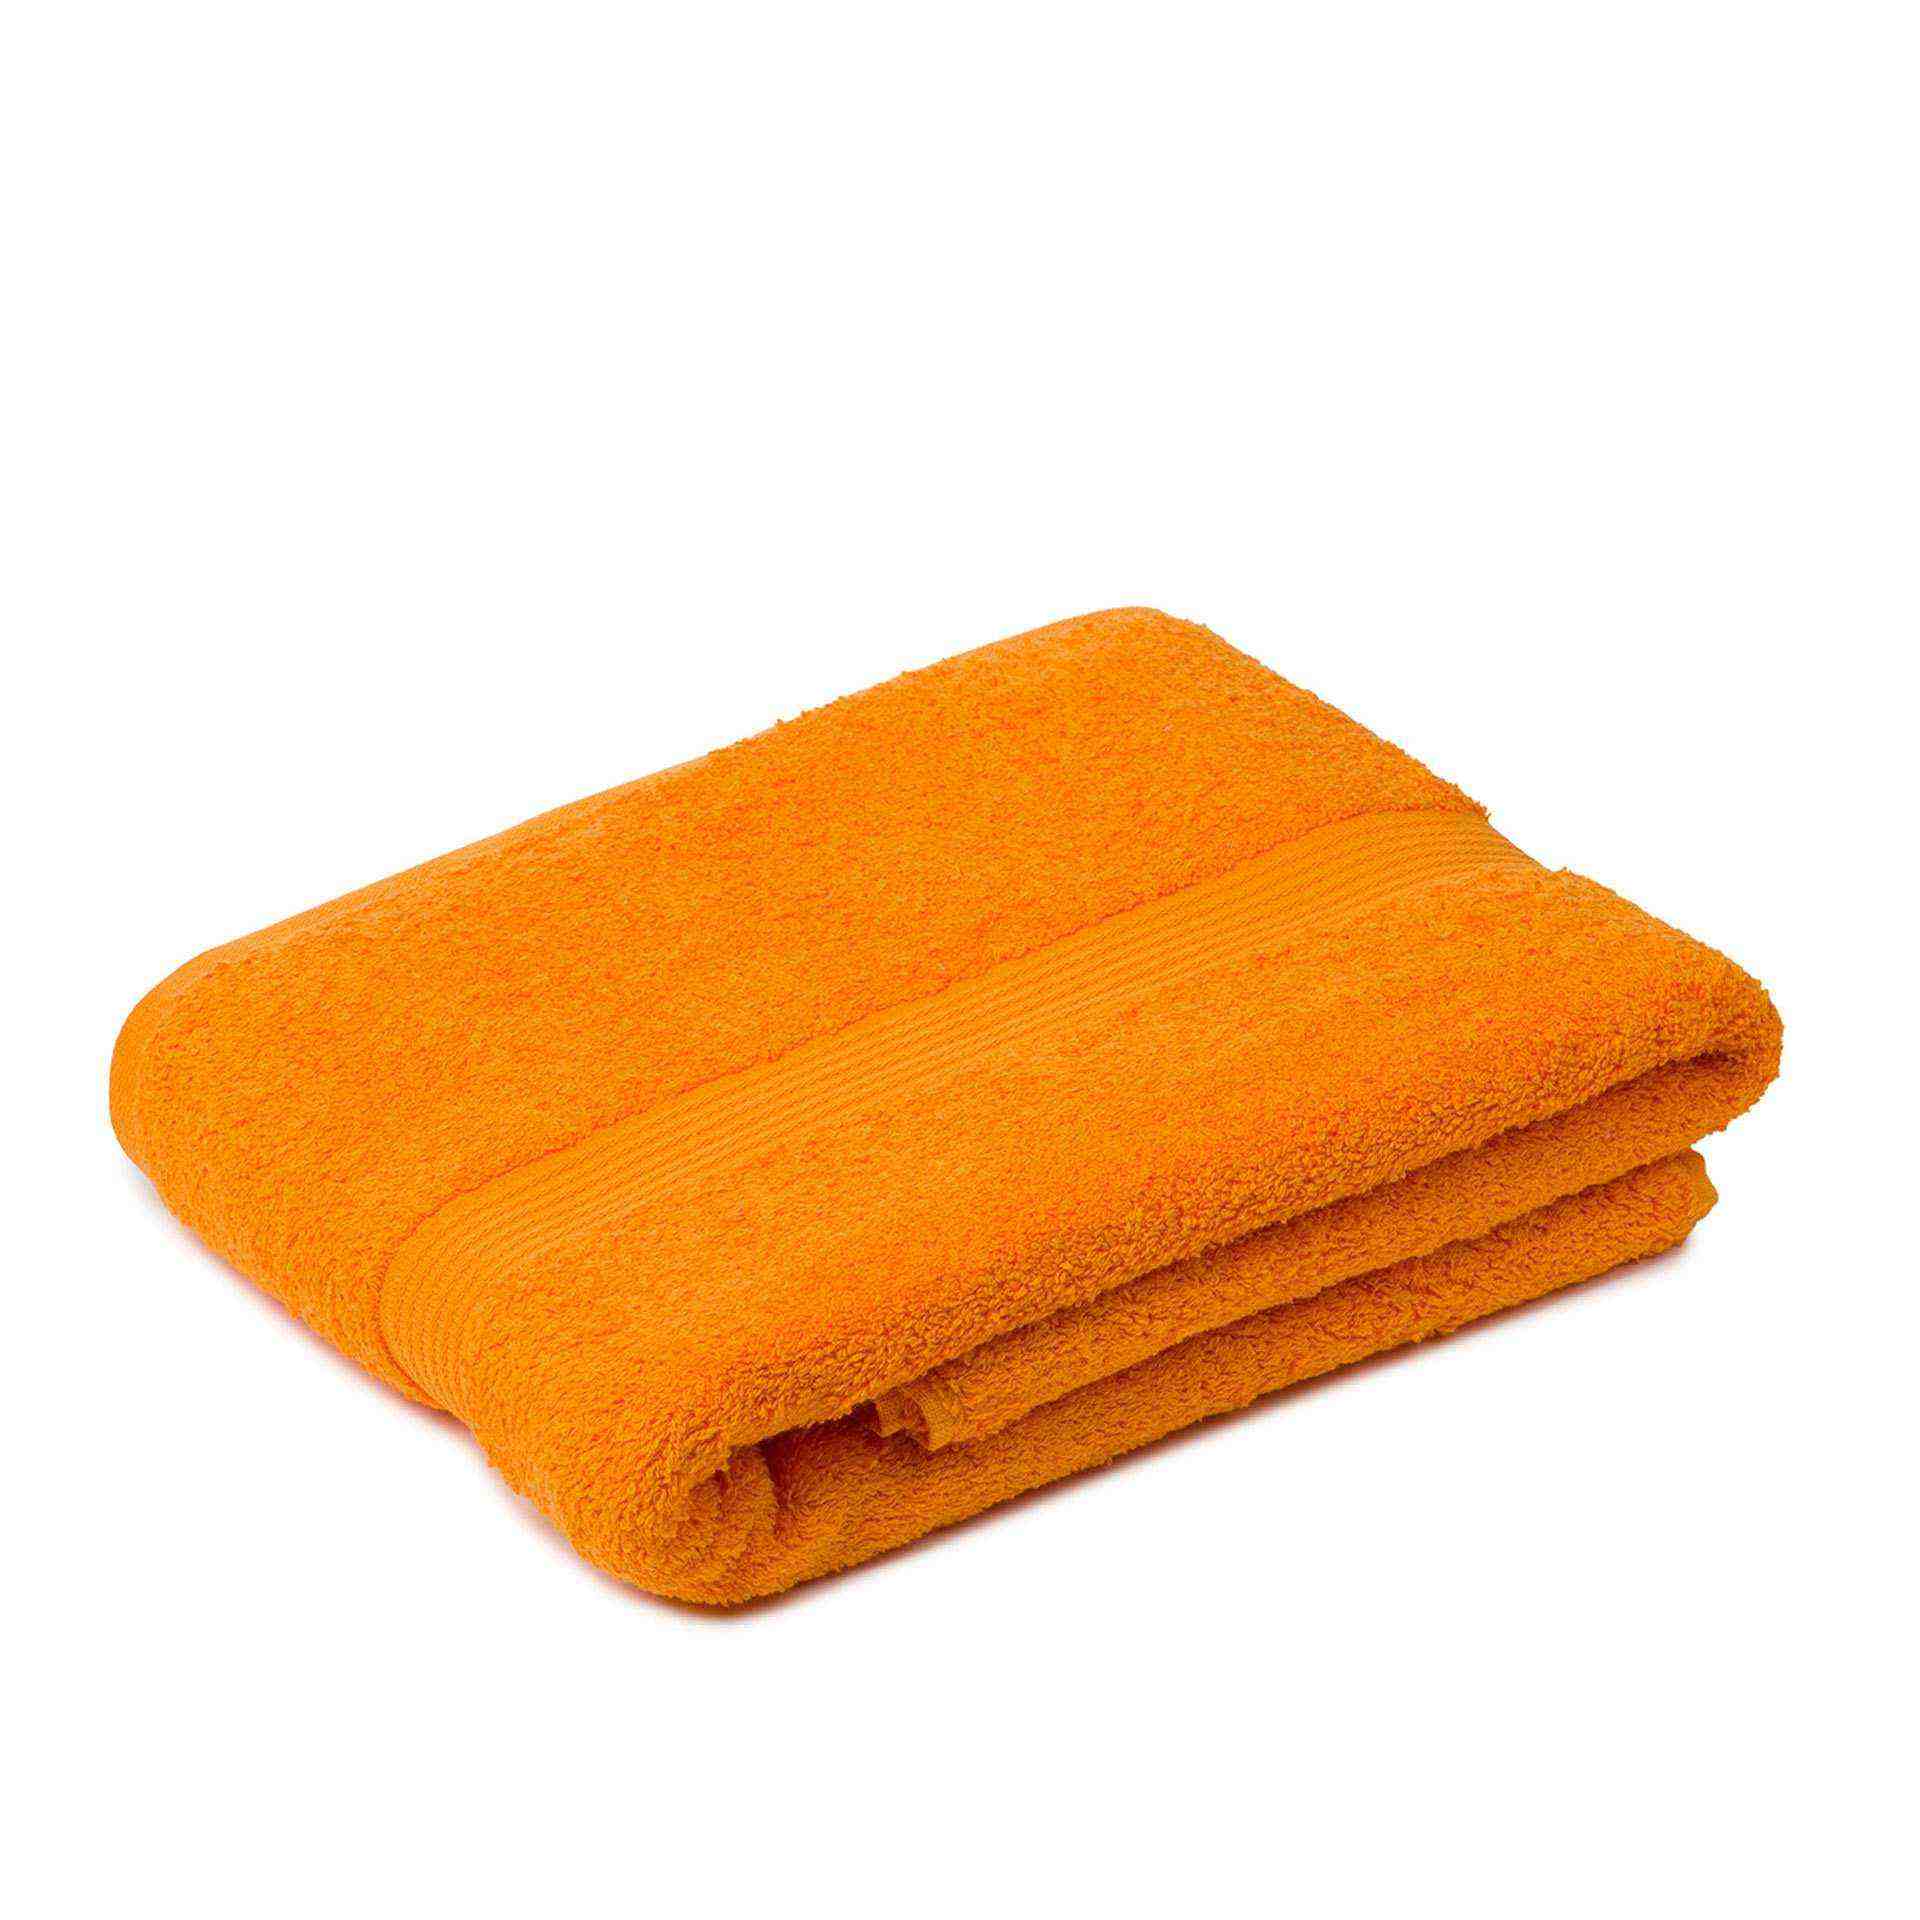 Badetuch - Uni - Serie NEW YORK - orange - Abm. 100 x 150 cm - Baumwolle - 550-0764-6-D